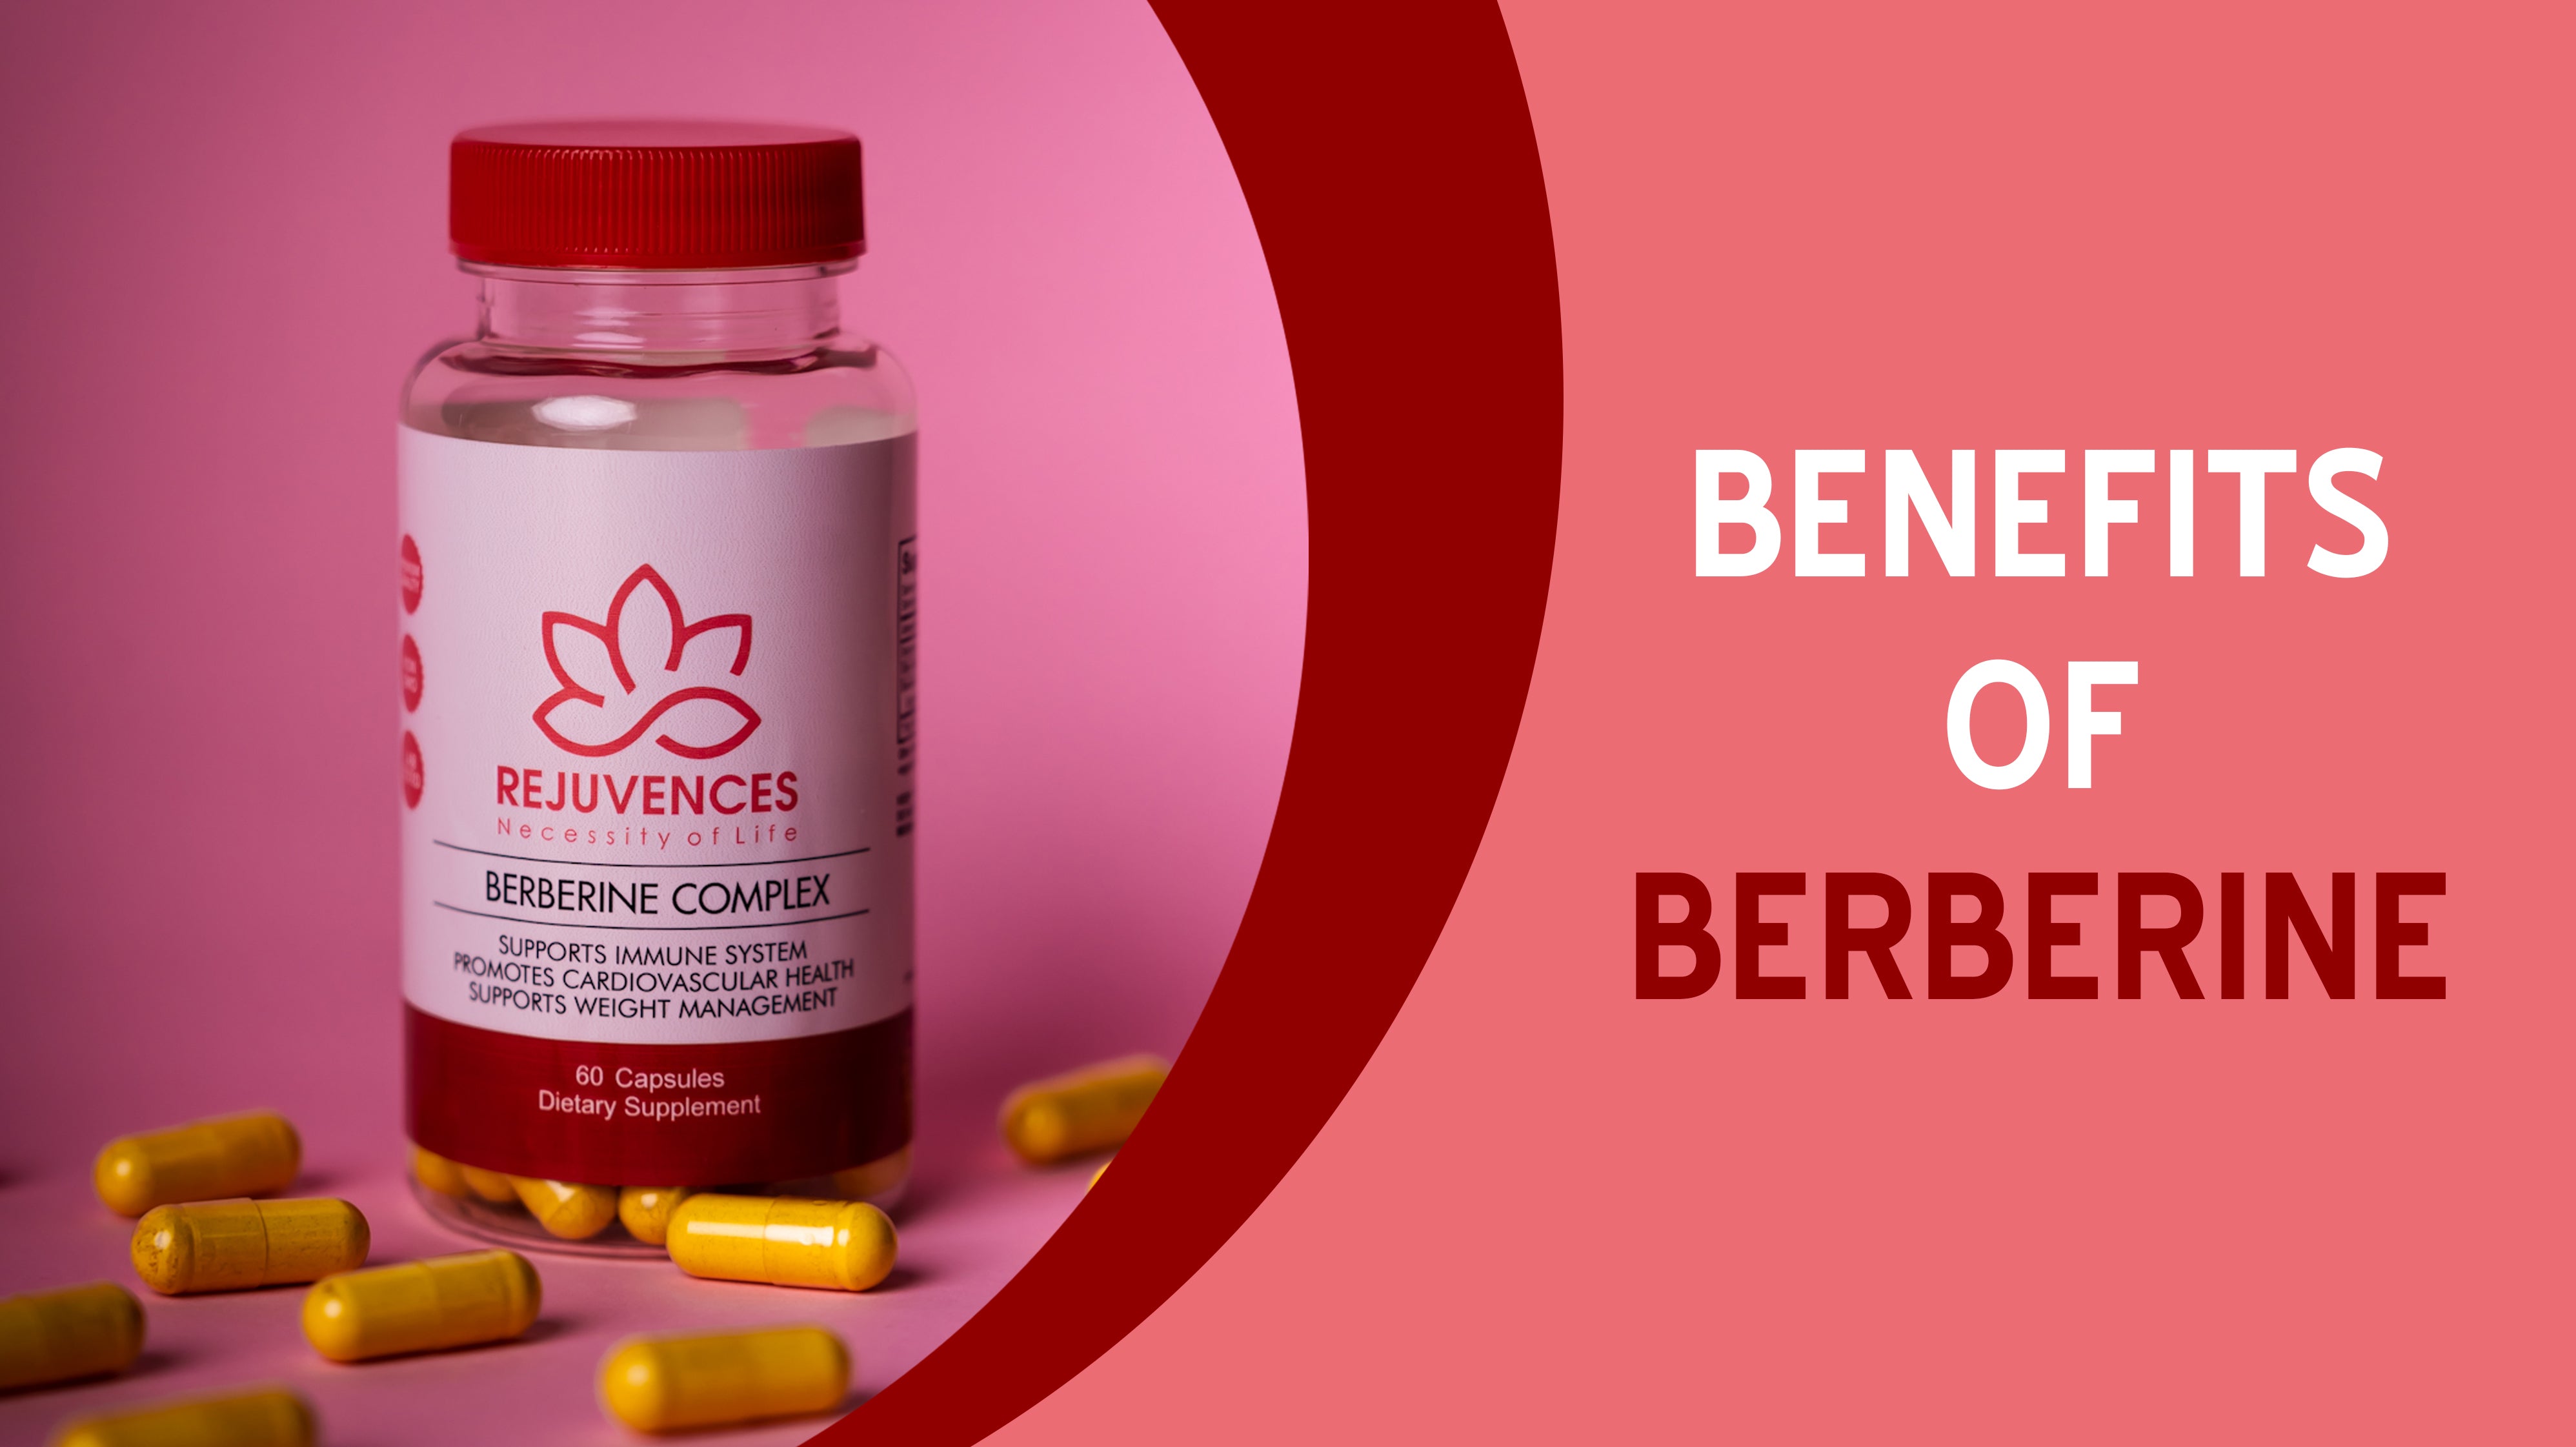 The Benefits of Berberine